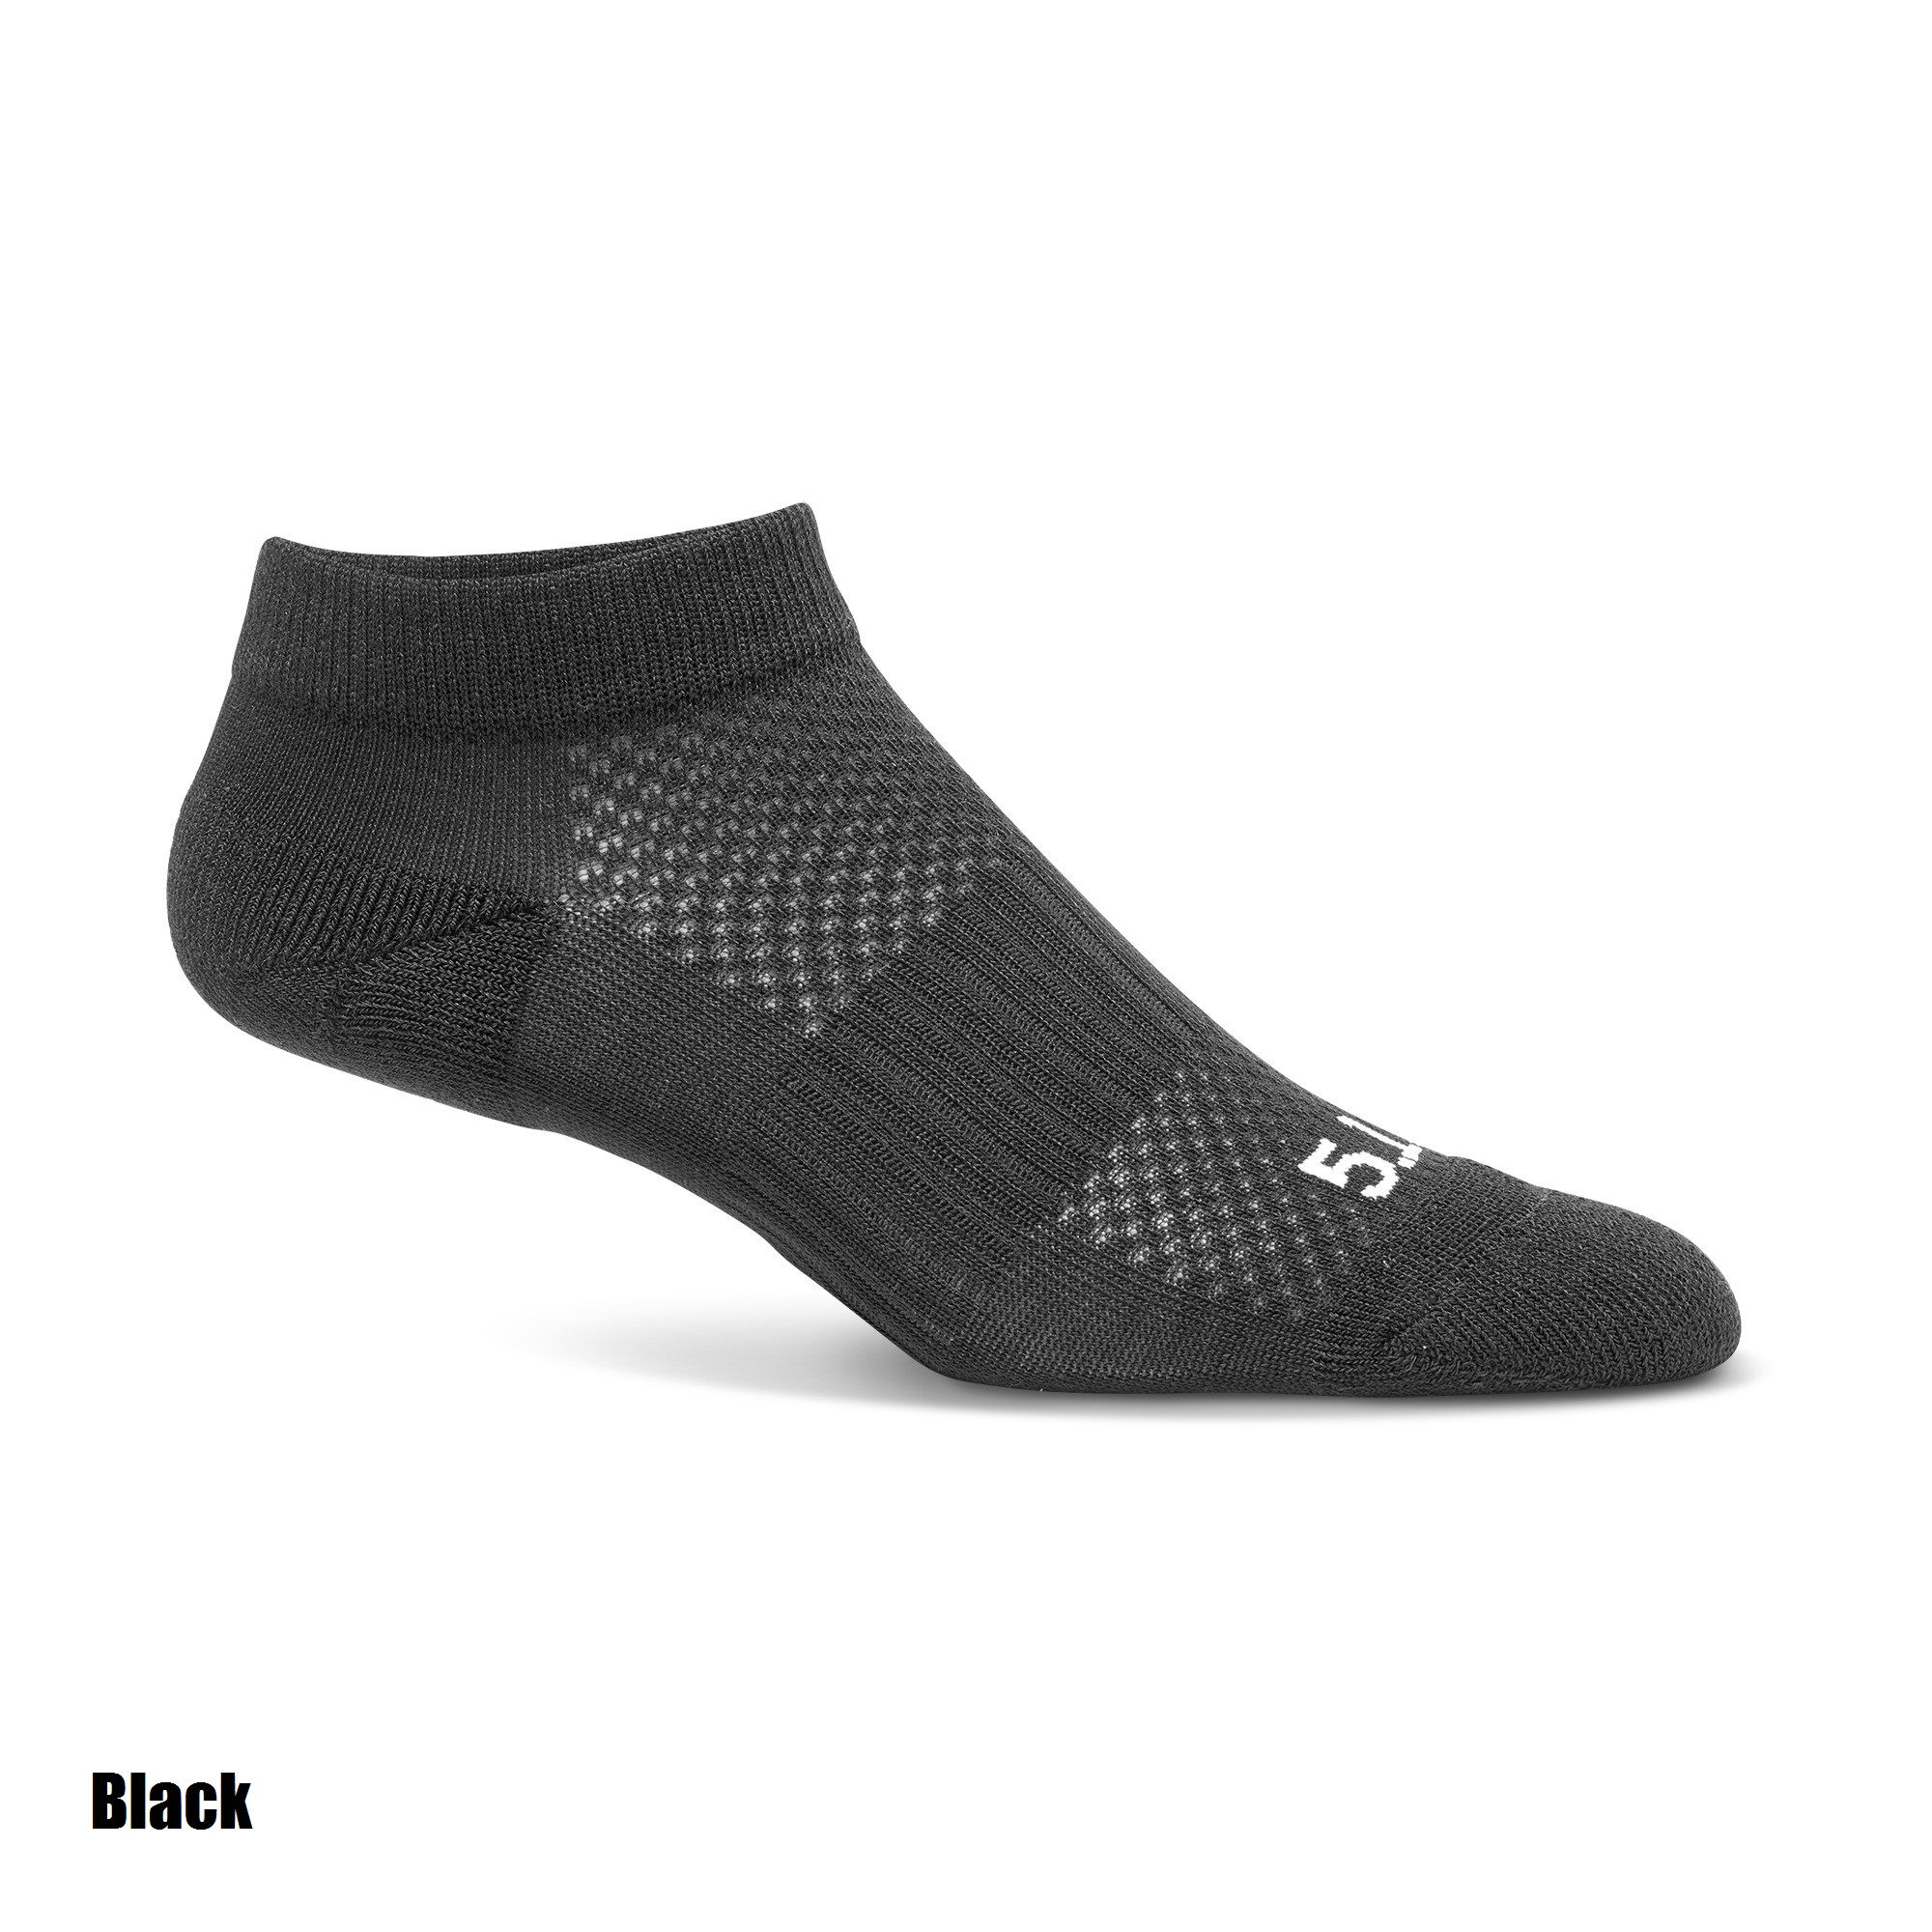 5.11 PT Ankle Sock – 3 Pack